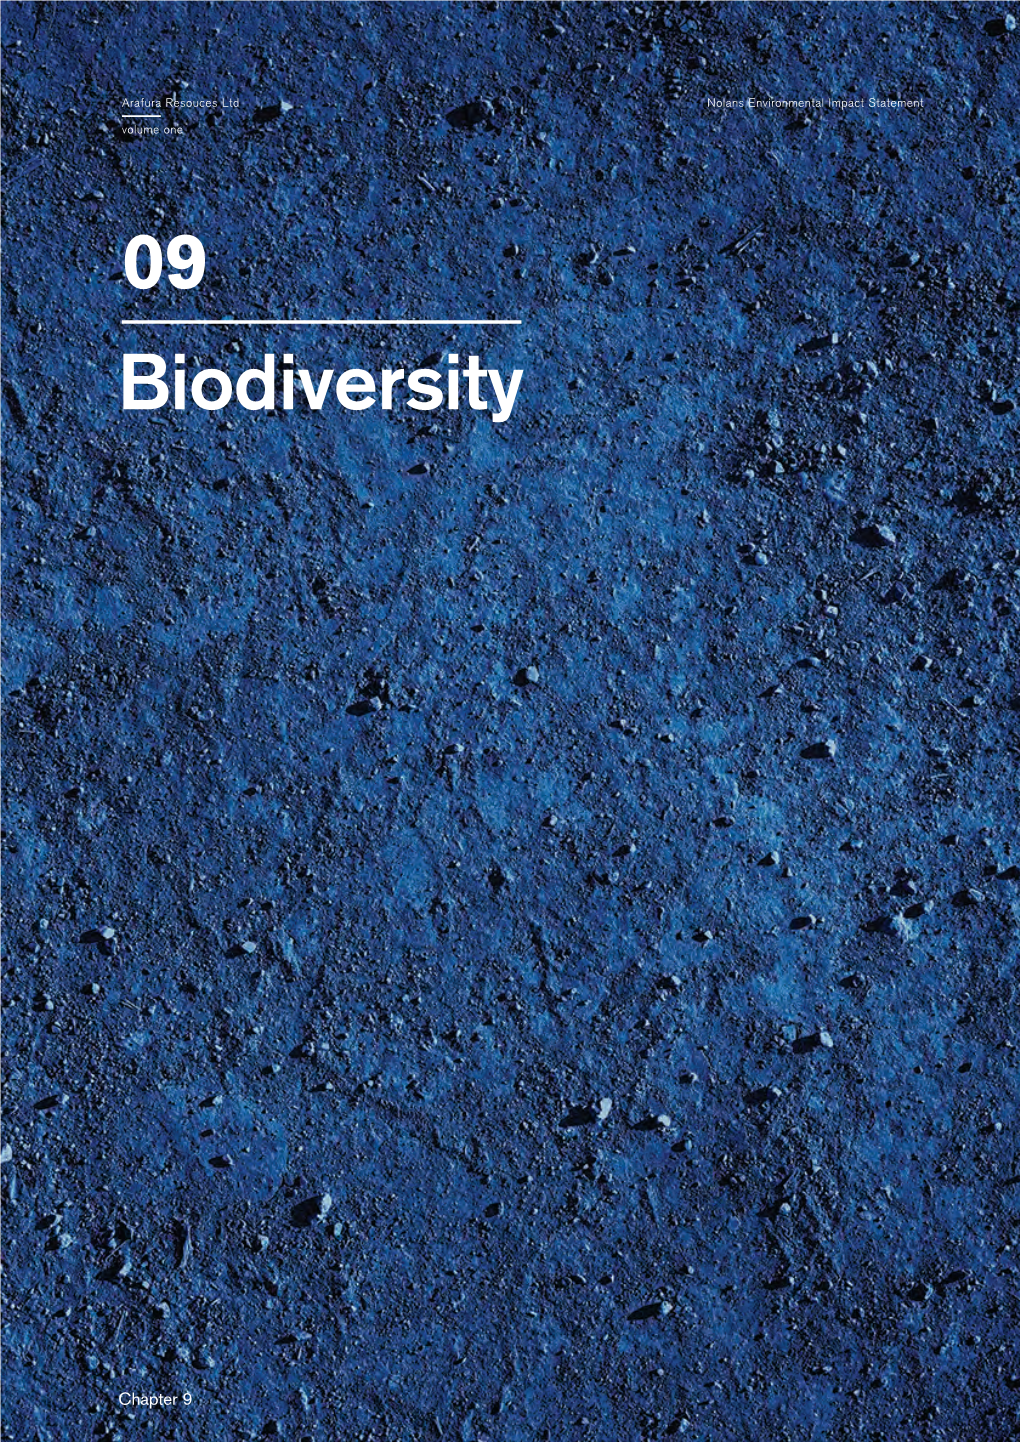 Chapter 9: Biodiversity